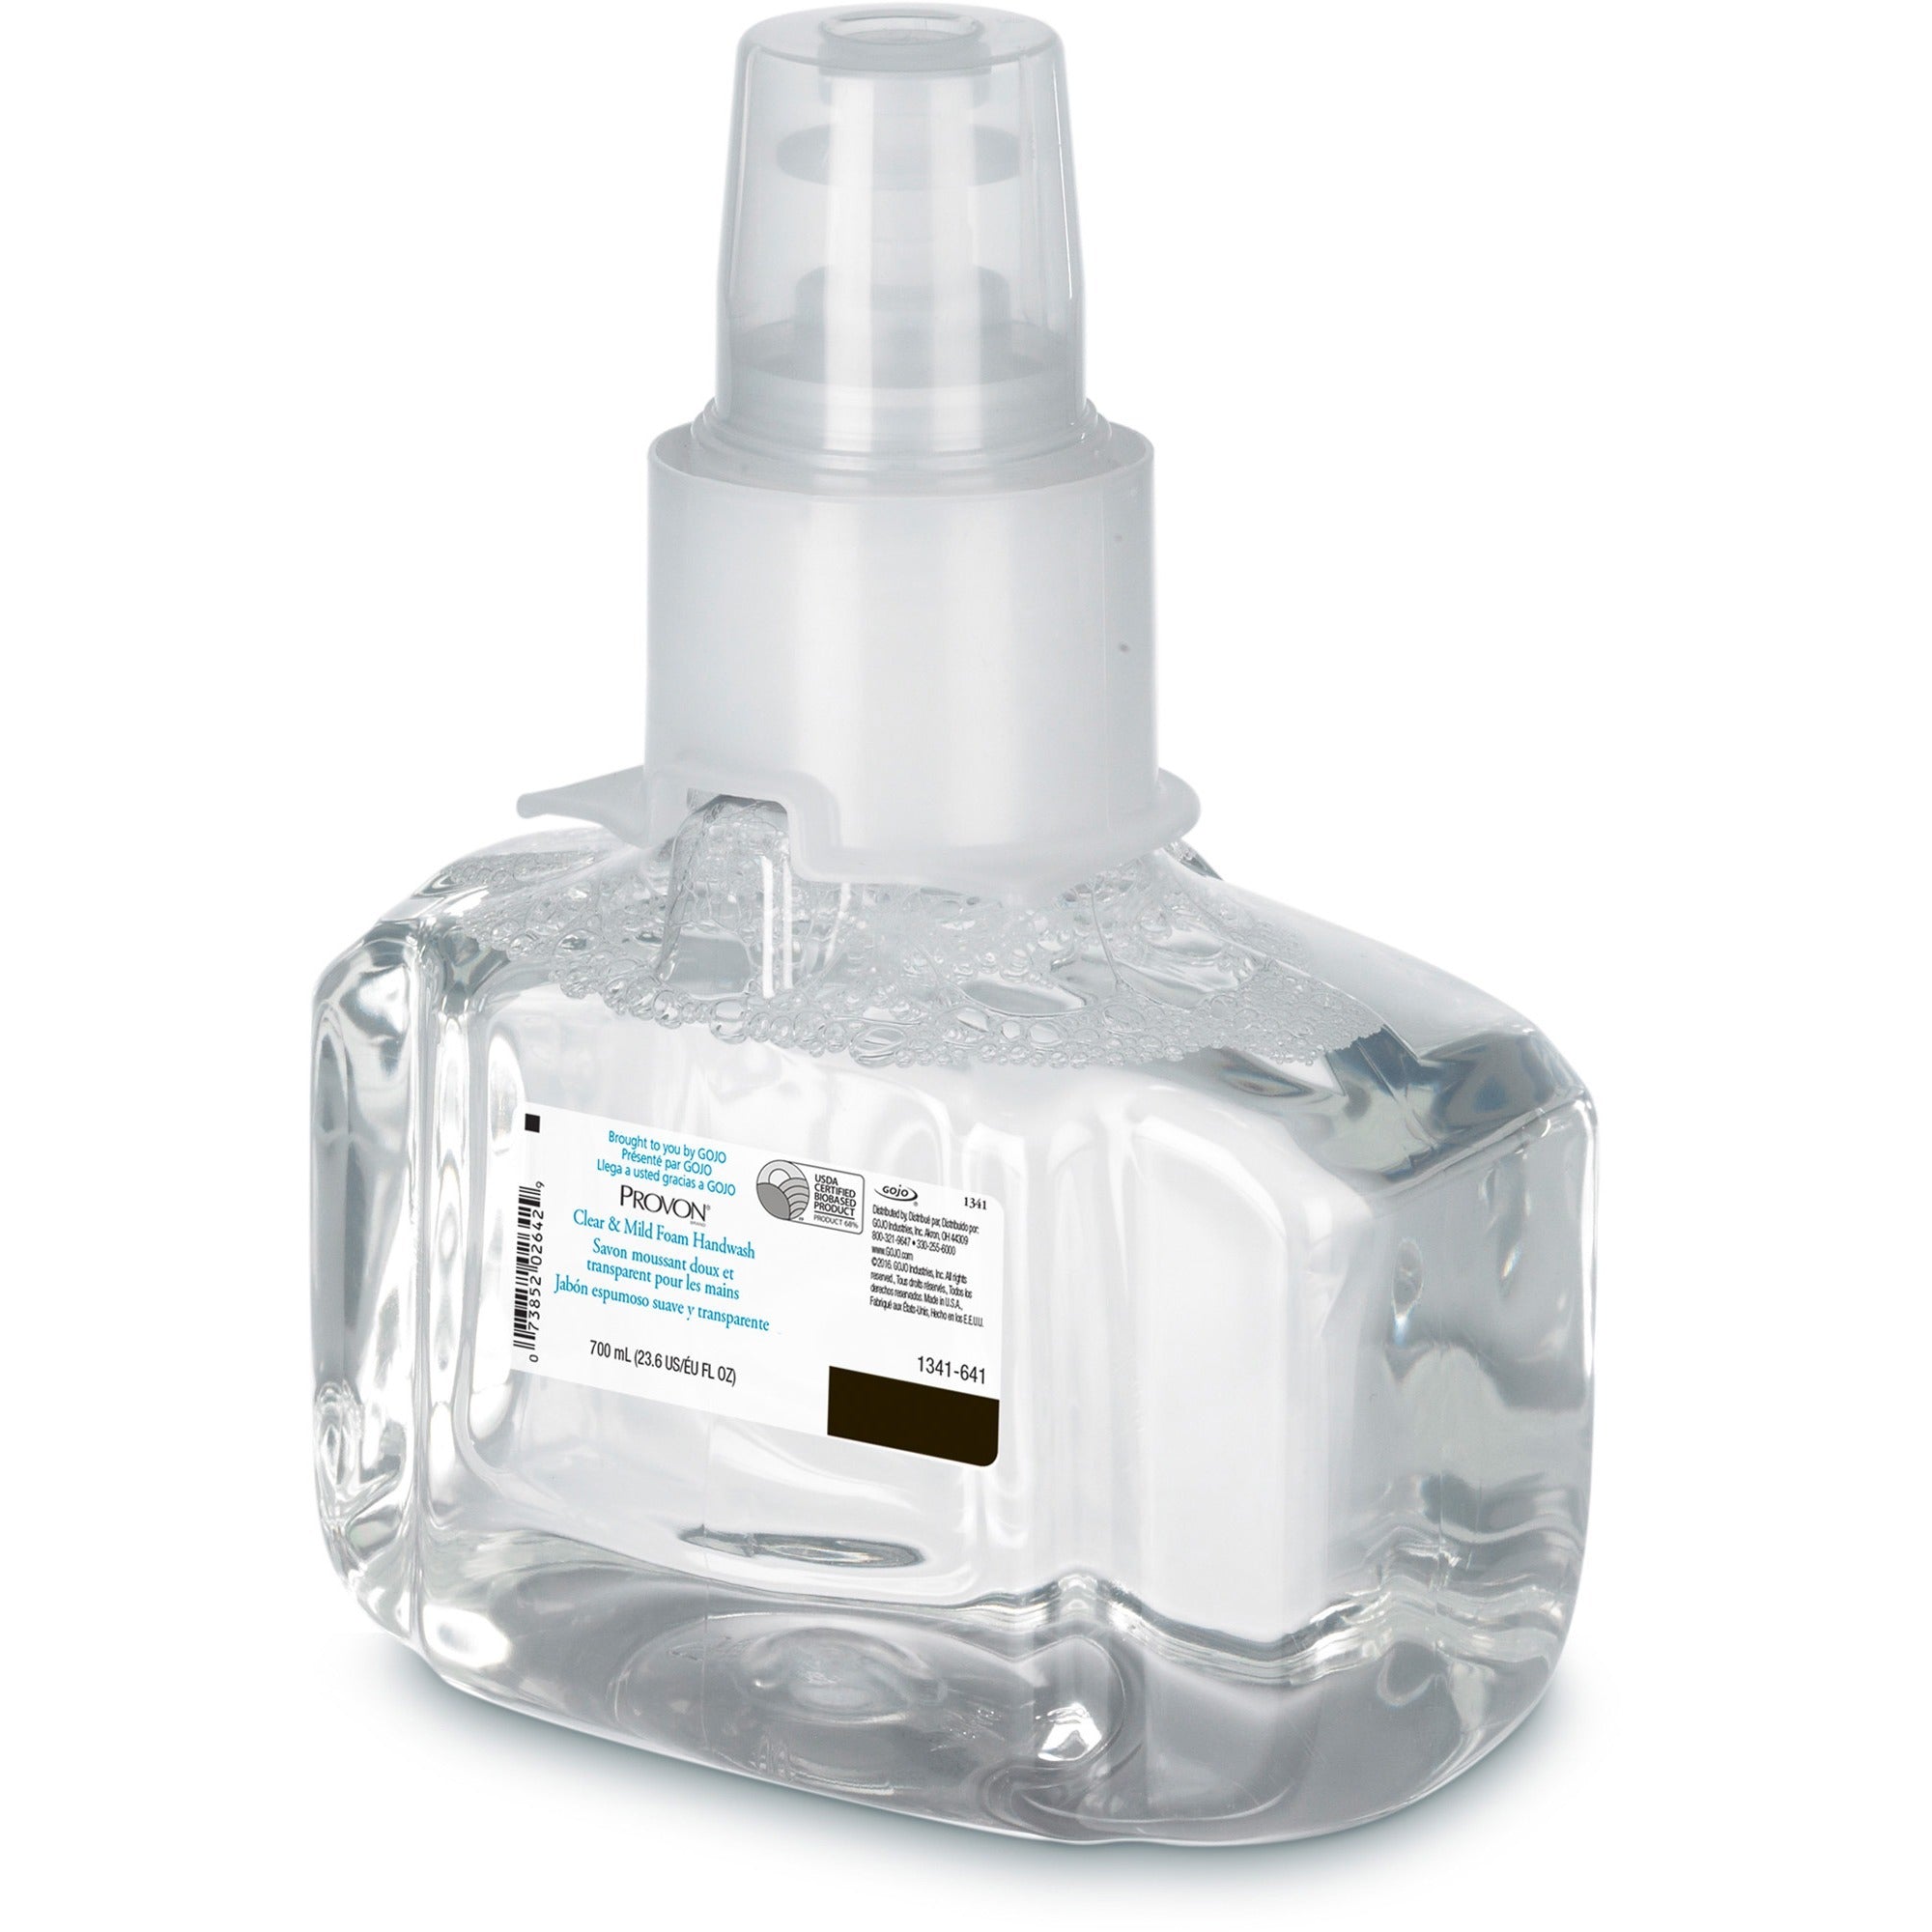 provon-ltx-7-clear-&-mild-foam-handwash-refill-fragrance-free-scentfor-237-fl-oz-700-ml-pump-bottle-dispenser-kill-germs-hand-moisturizing-clear-rich-lather-dye-free-bio-based-3-carton_goj134103ct - 2